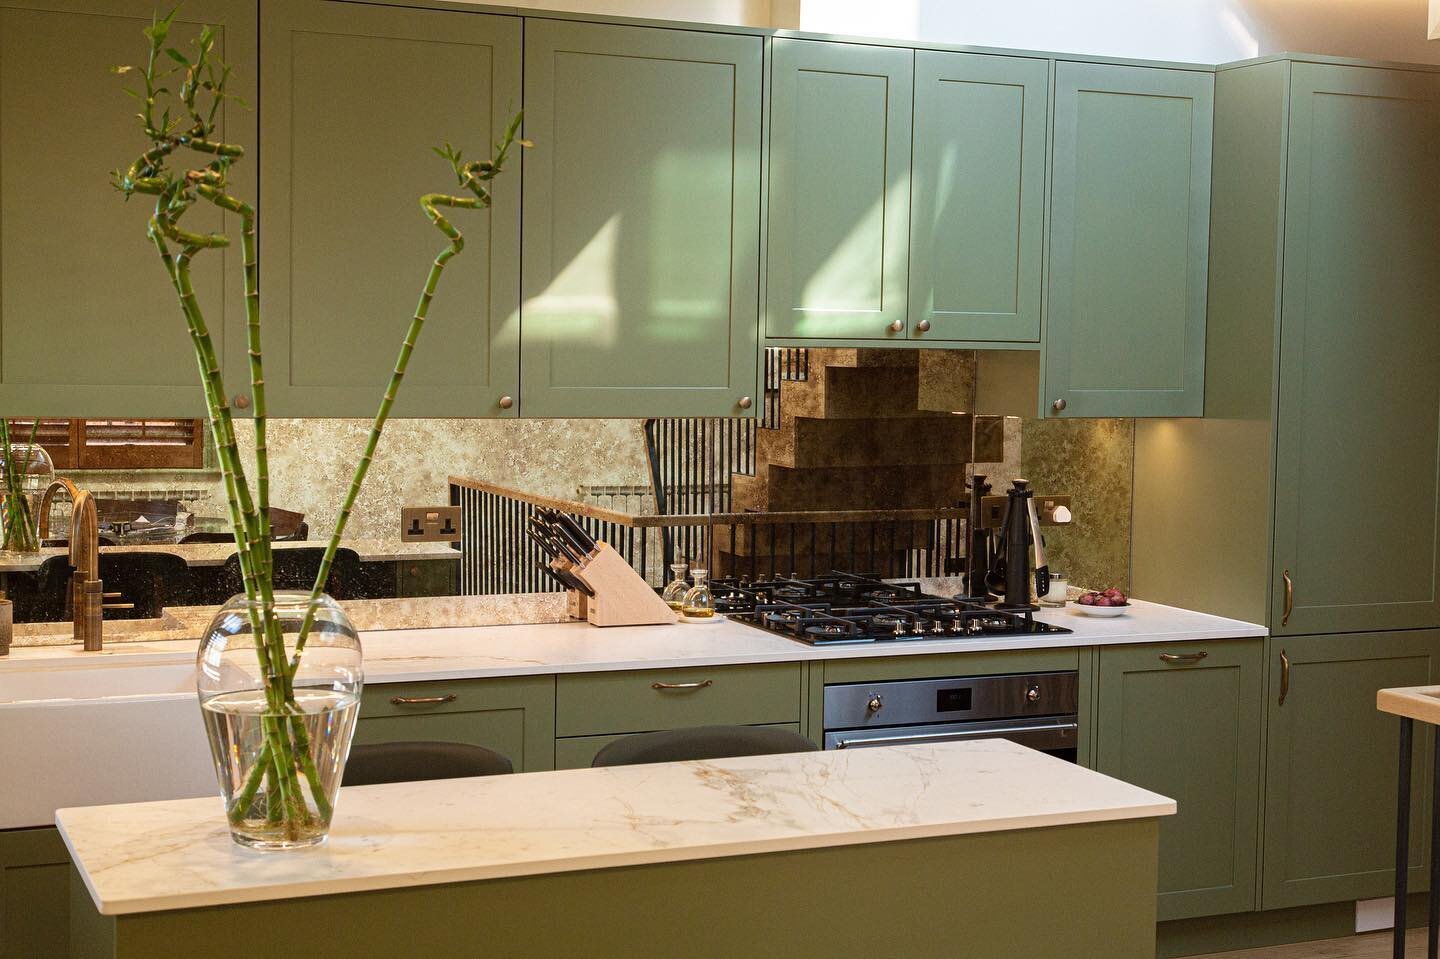 Does this Olaf kitchen make you green with envy? 💚

#kitchen #interiordesign #kitchendesign #home #homedecor #homerenovation #kitcheninspo